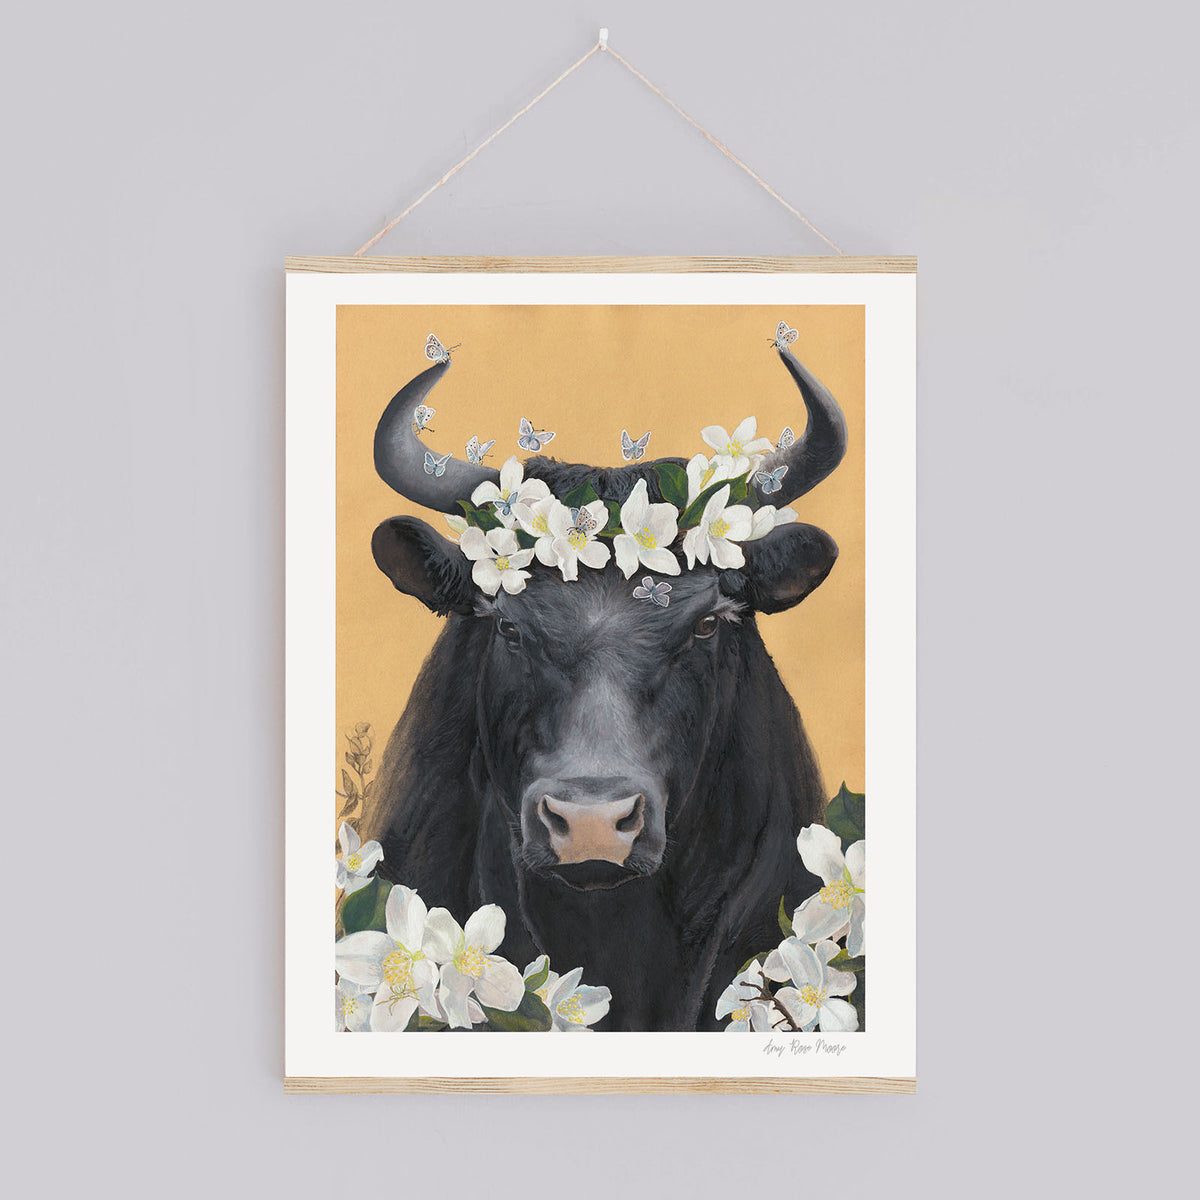 Ferdinand the Bull Print